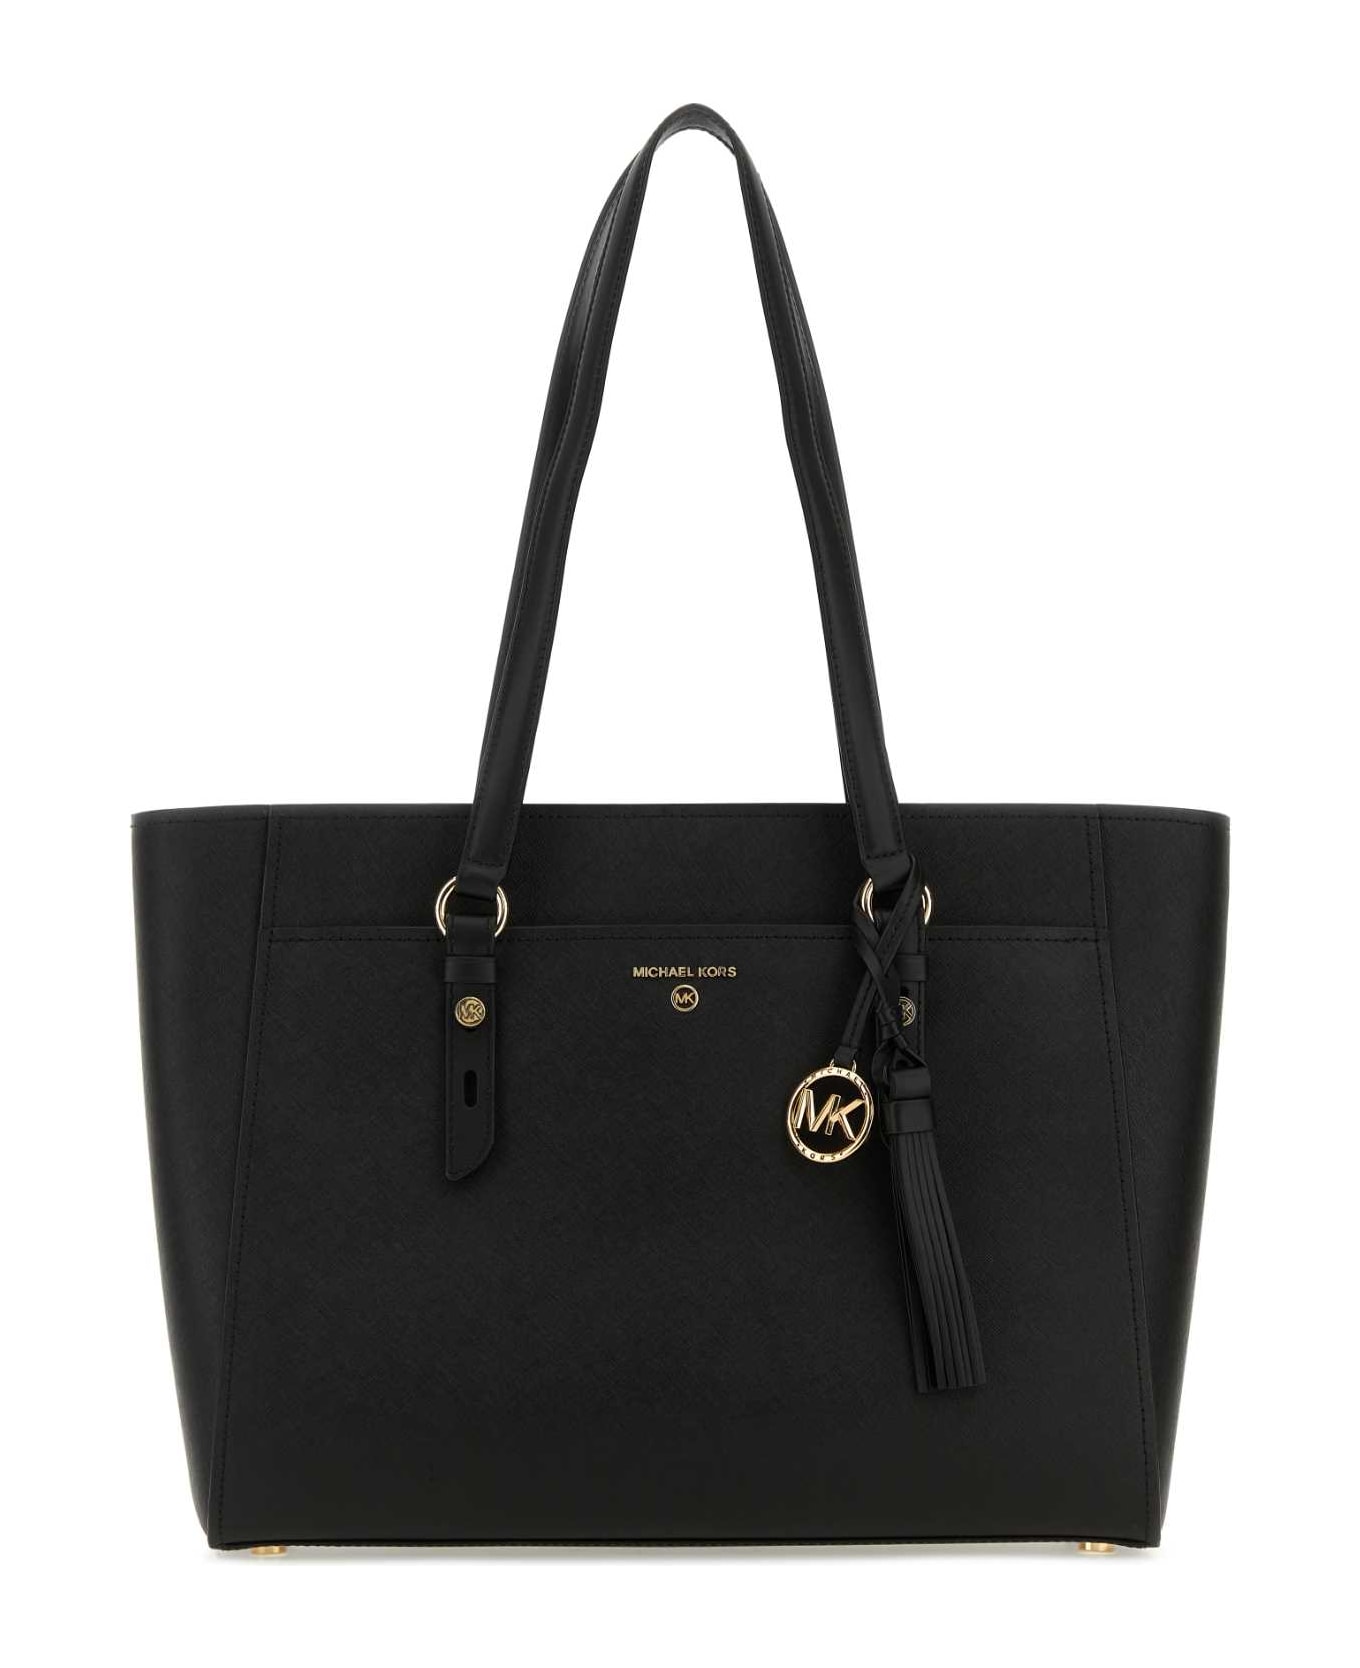 Michael Kors Black Leather Large Sullivan Shopping Bag - BLACK トートバッグ